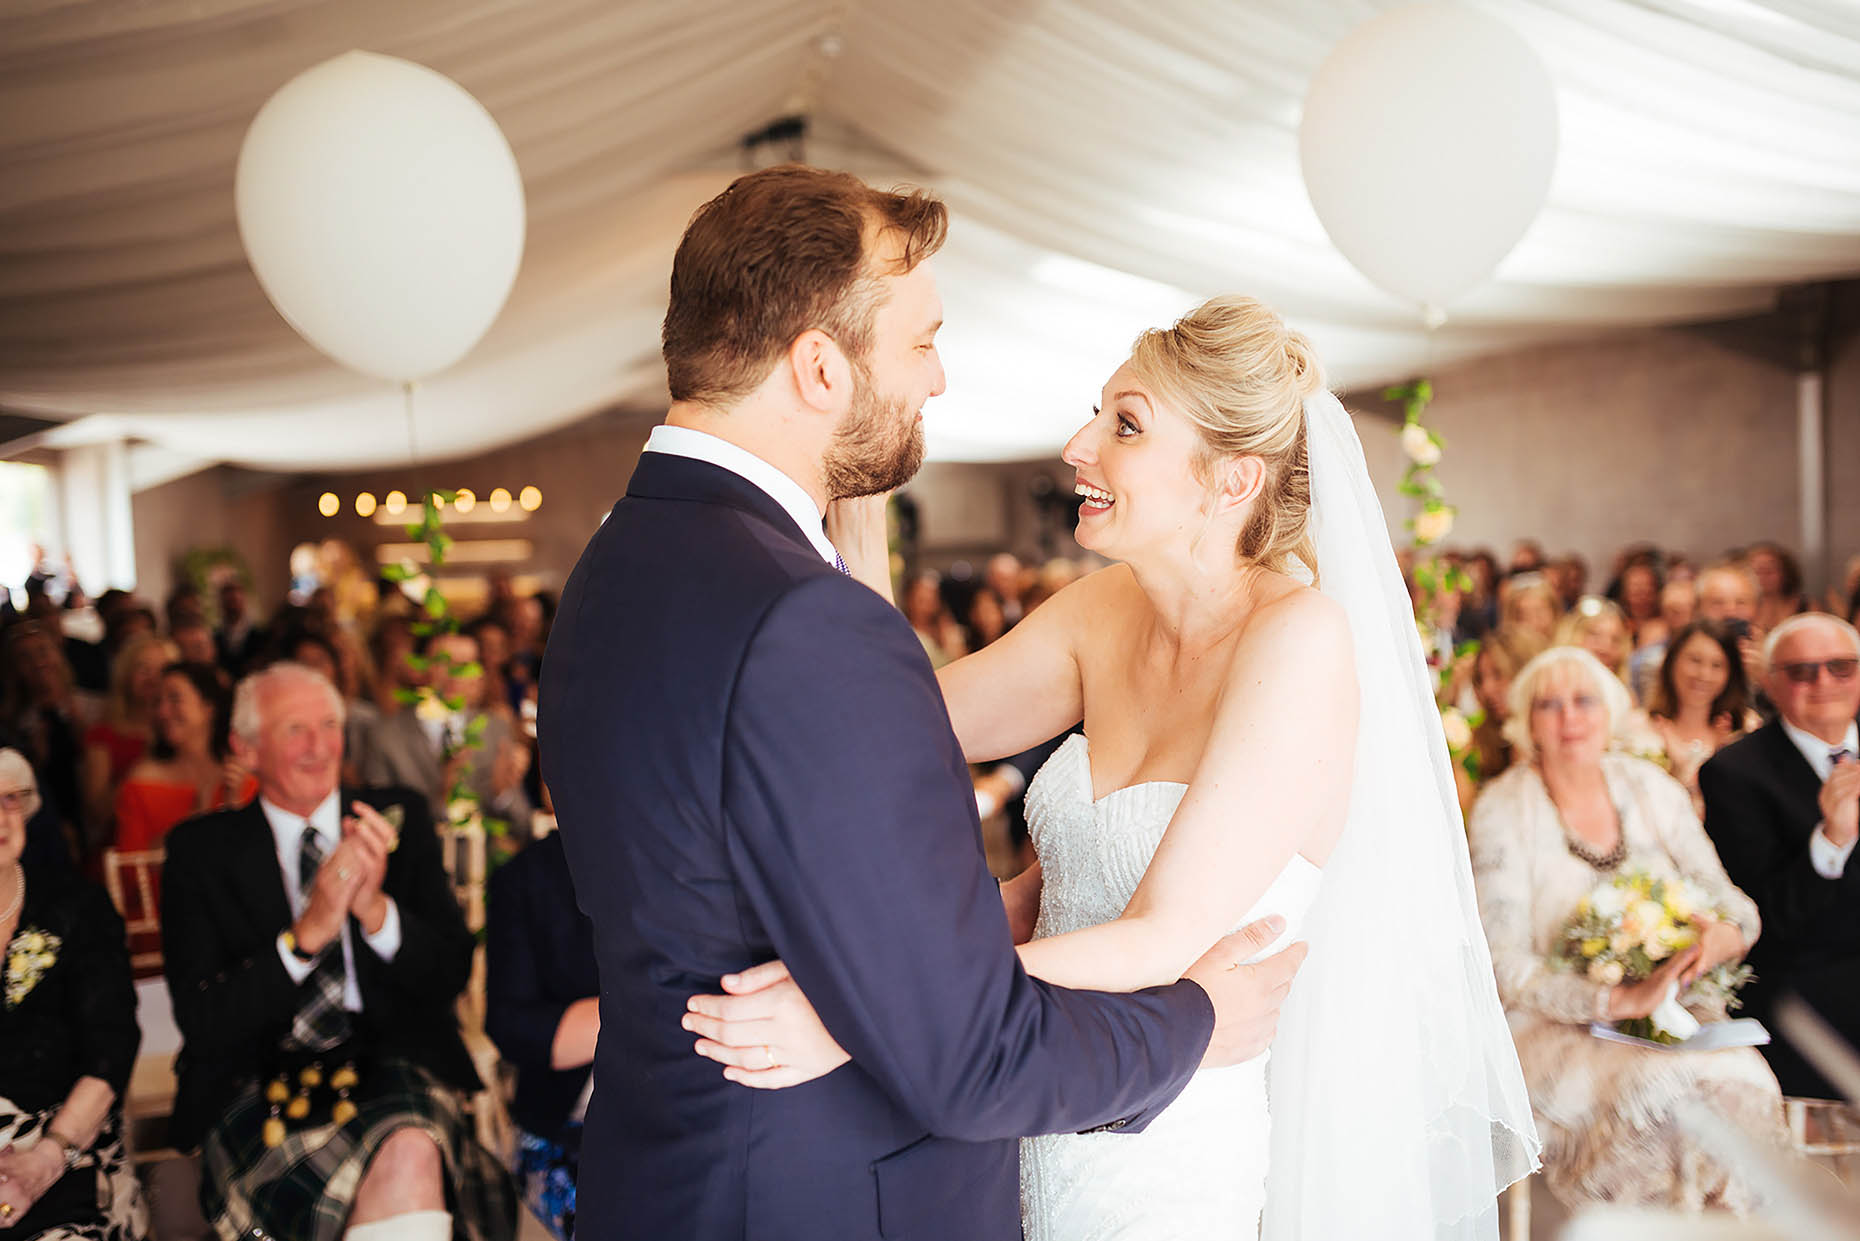 moment-married-wedding-ceremony-joy-couple-dorset-reportage-photographer-21